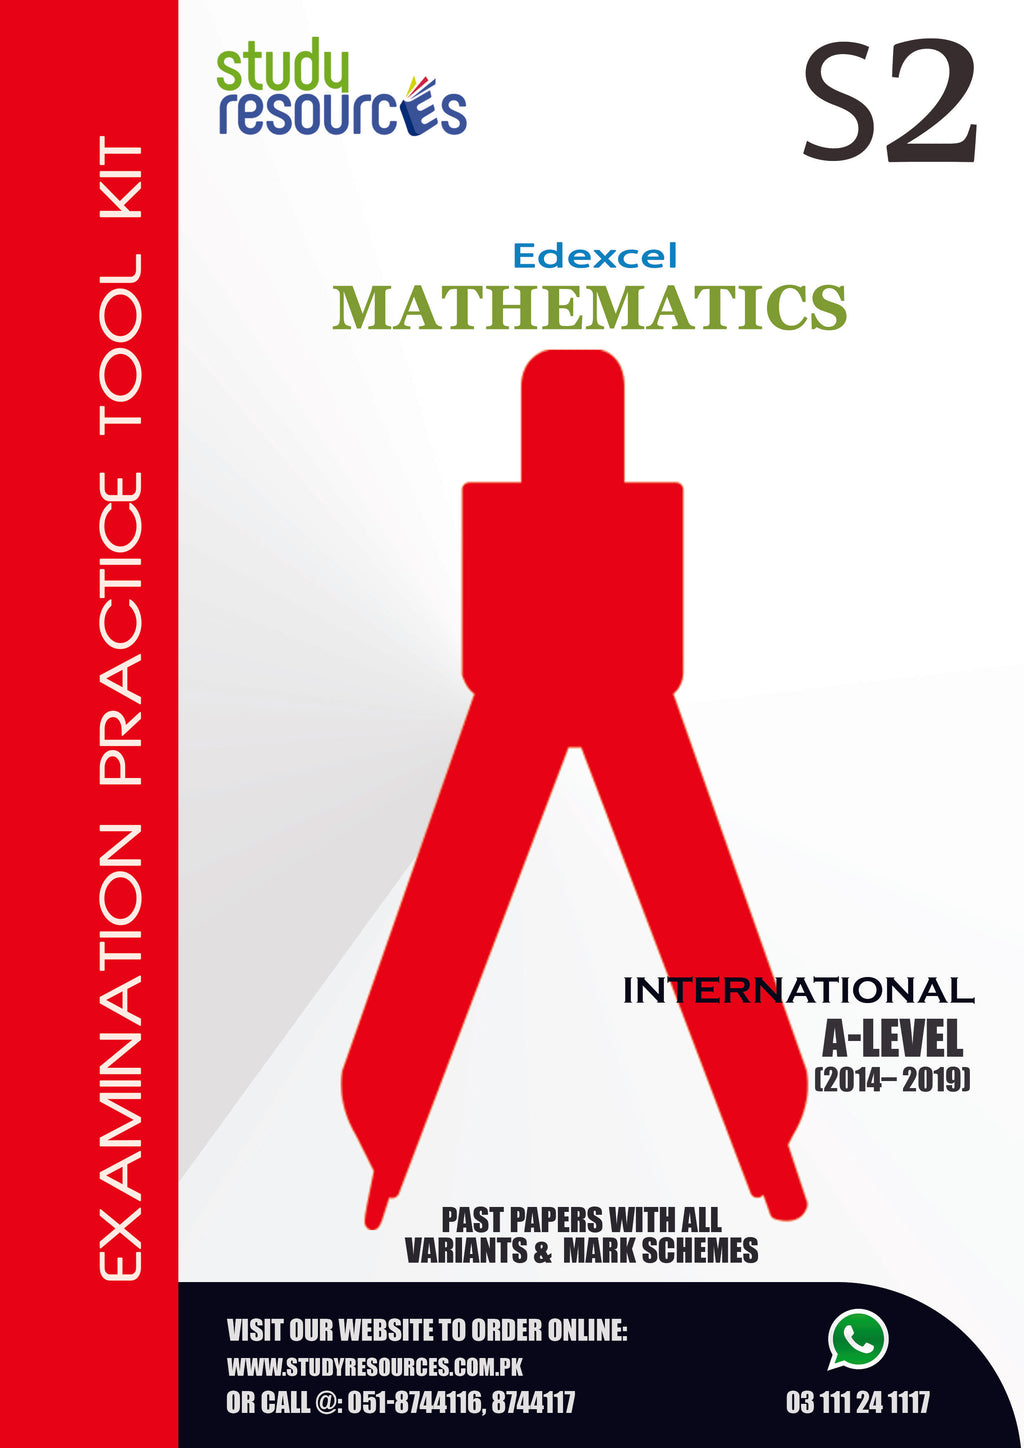 Edexcel A-Level Mathematics S-2 Past Papers (2014-2019)